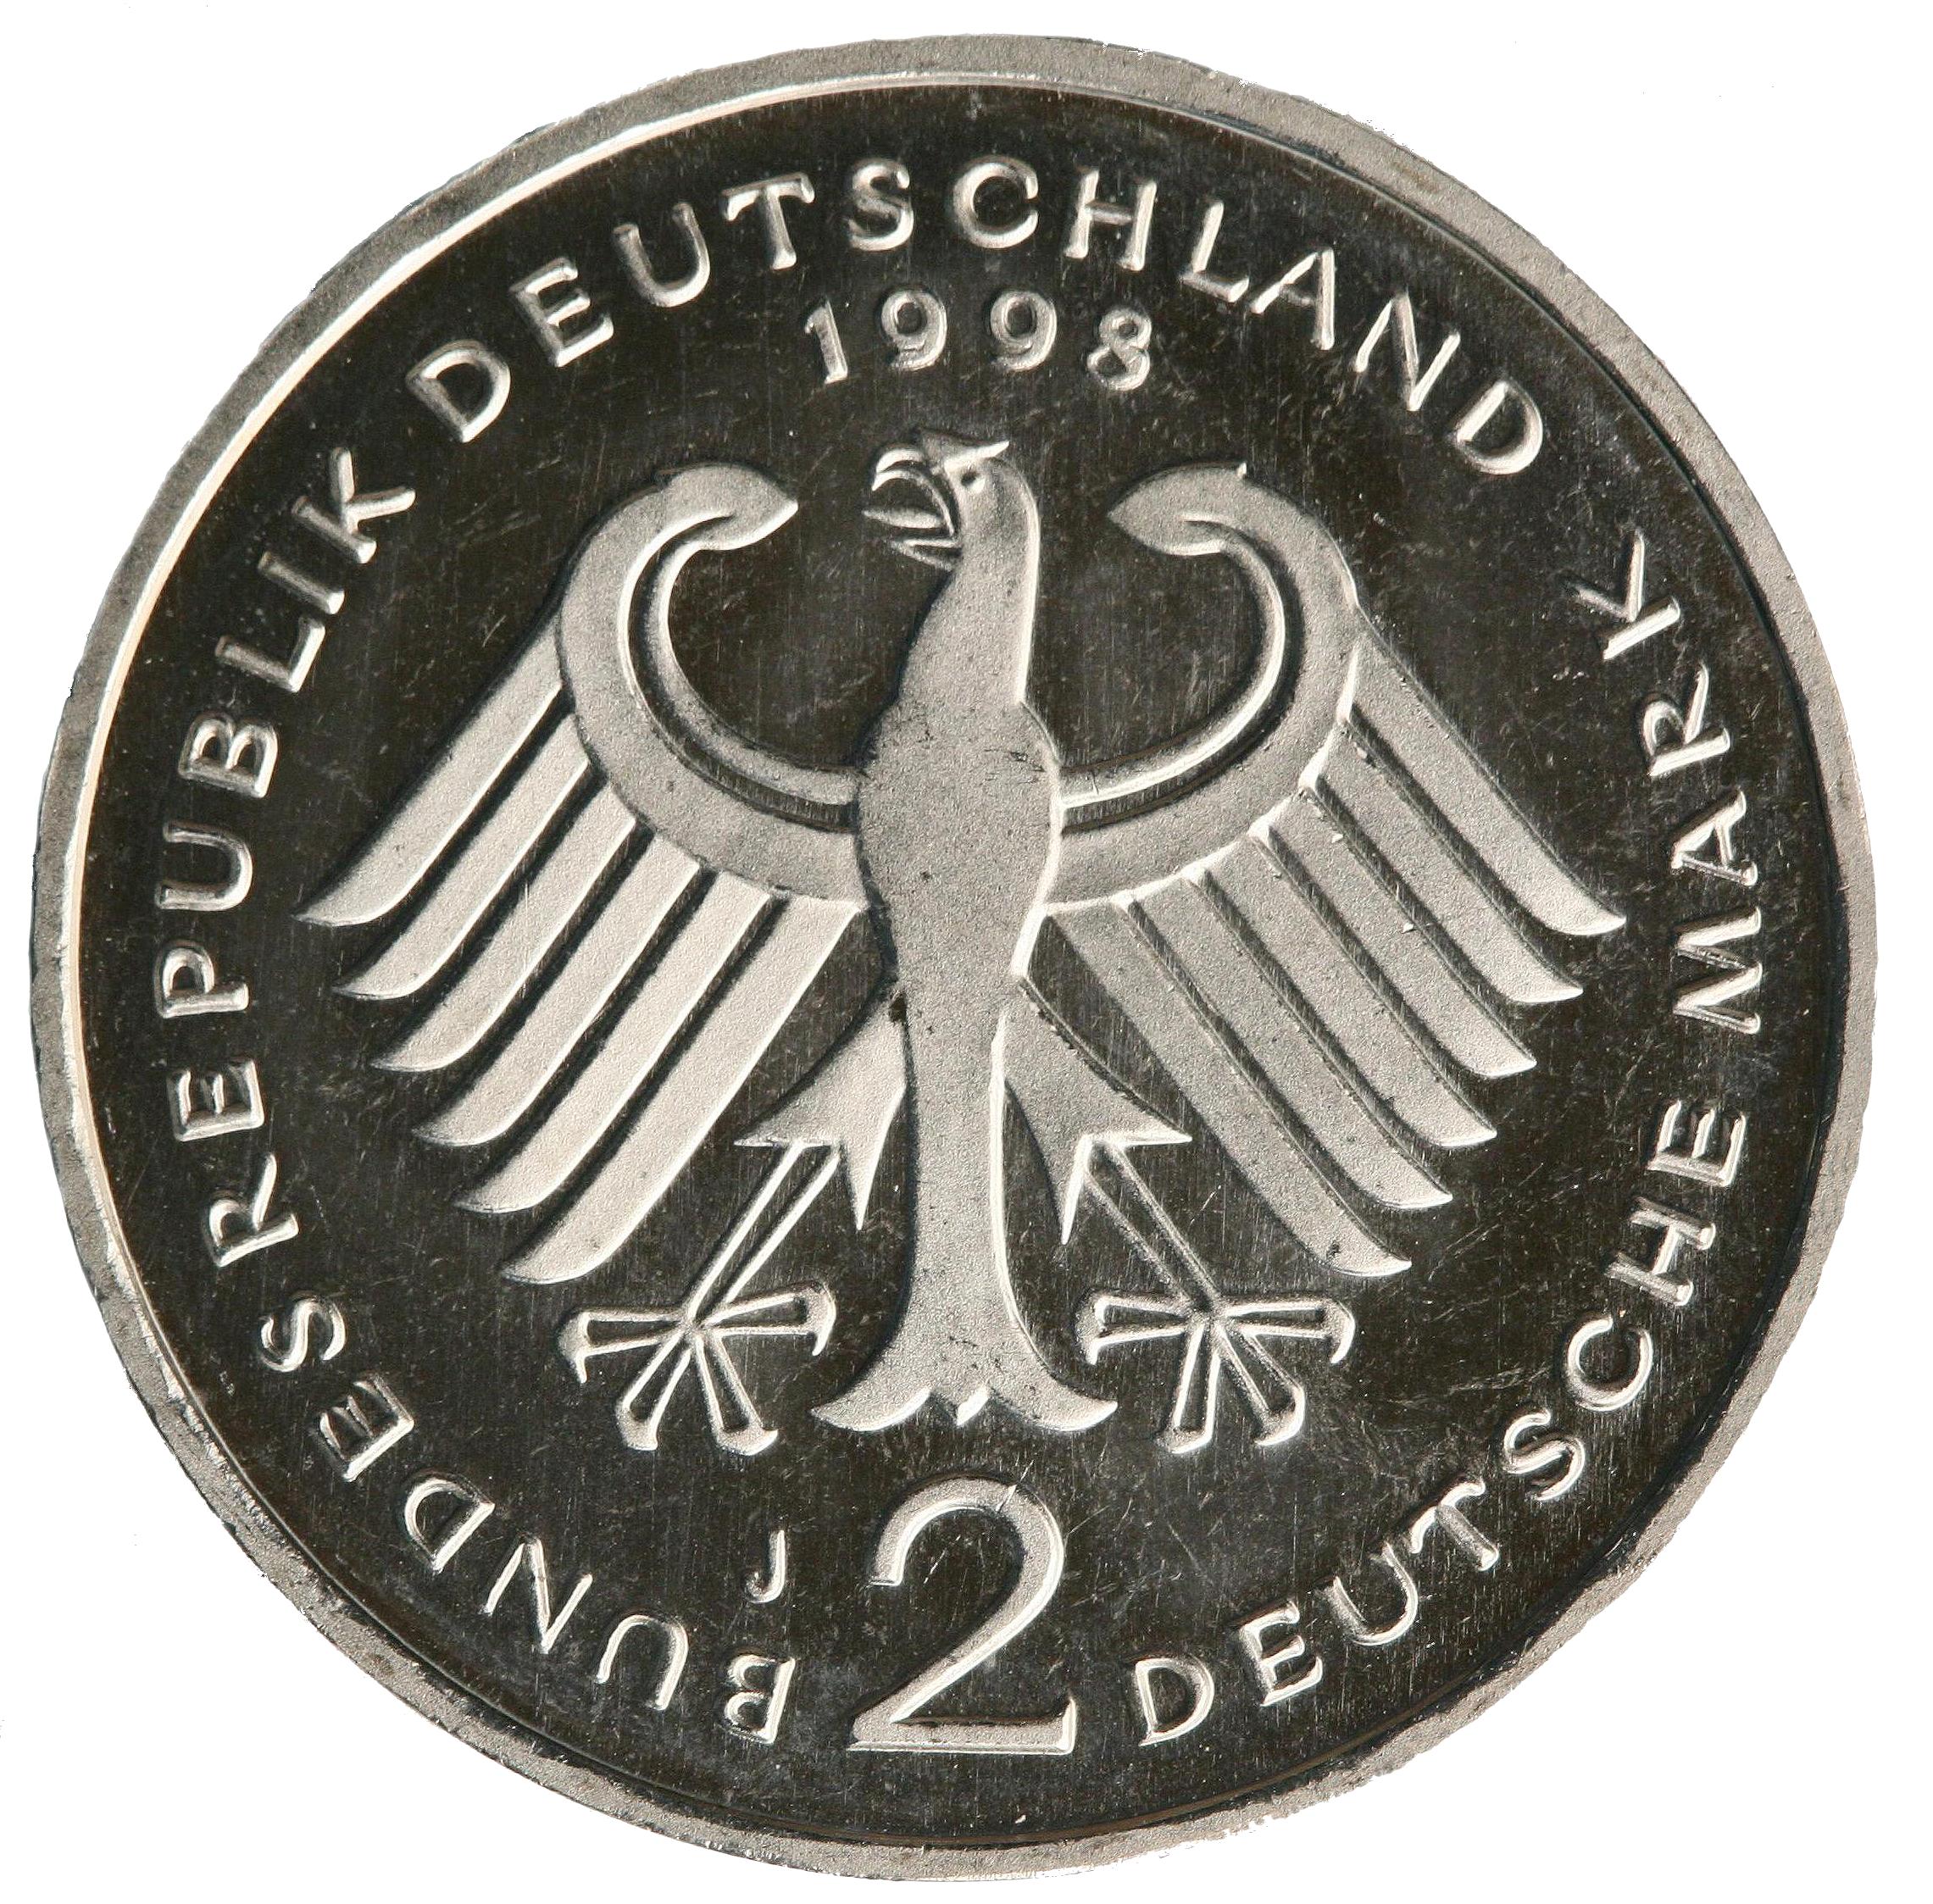 2-DM coin Strauss - reverse